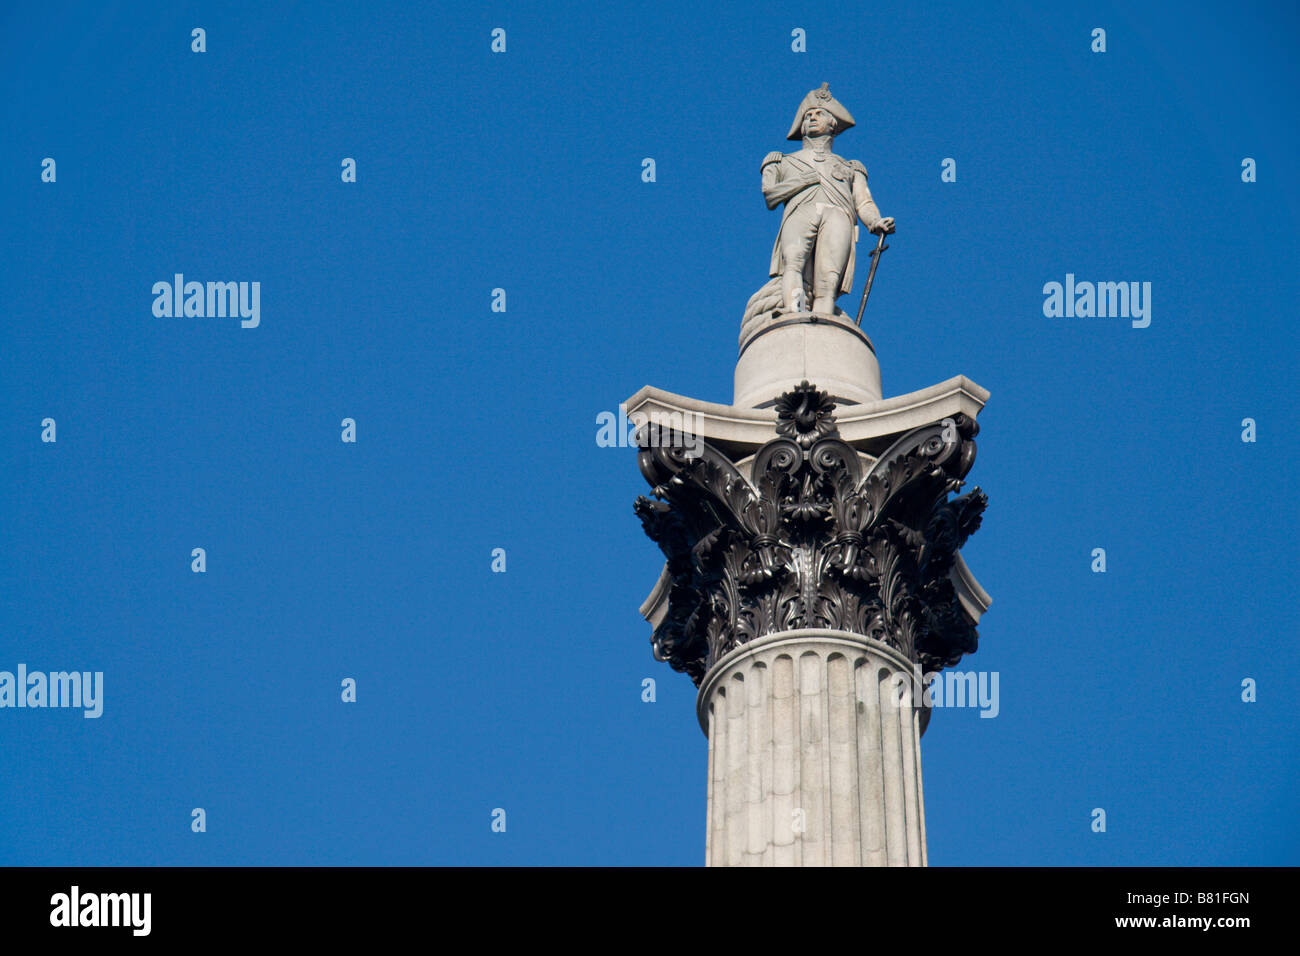 Off centre, horizontal view of Nelson's Column in Trafalgar Square, London. Jan 2009. Stock Photo